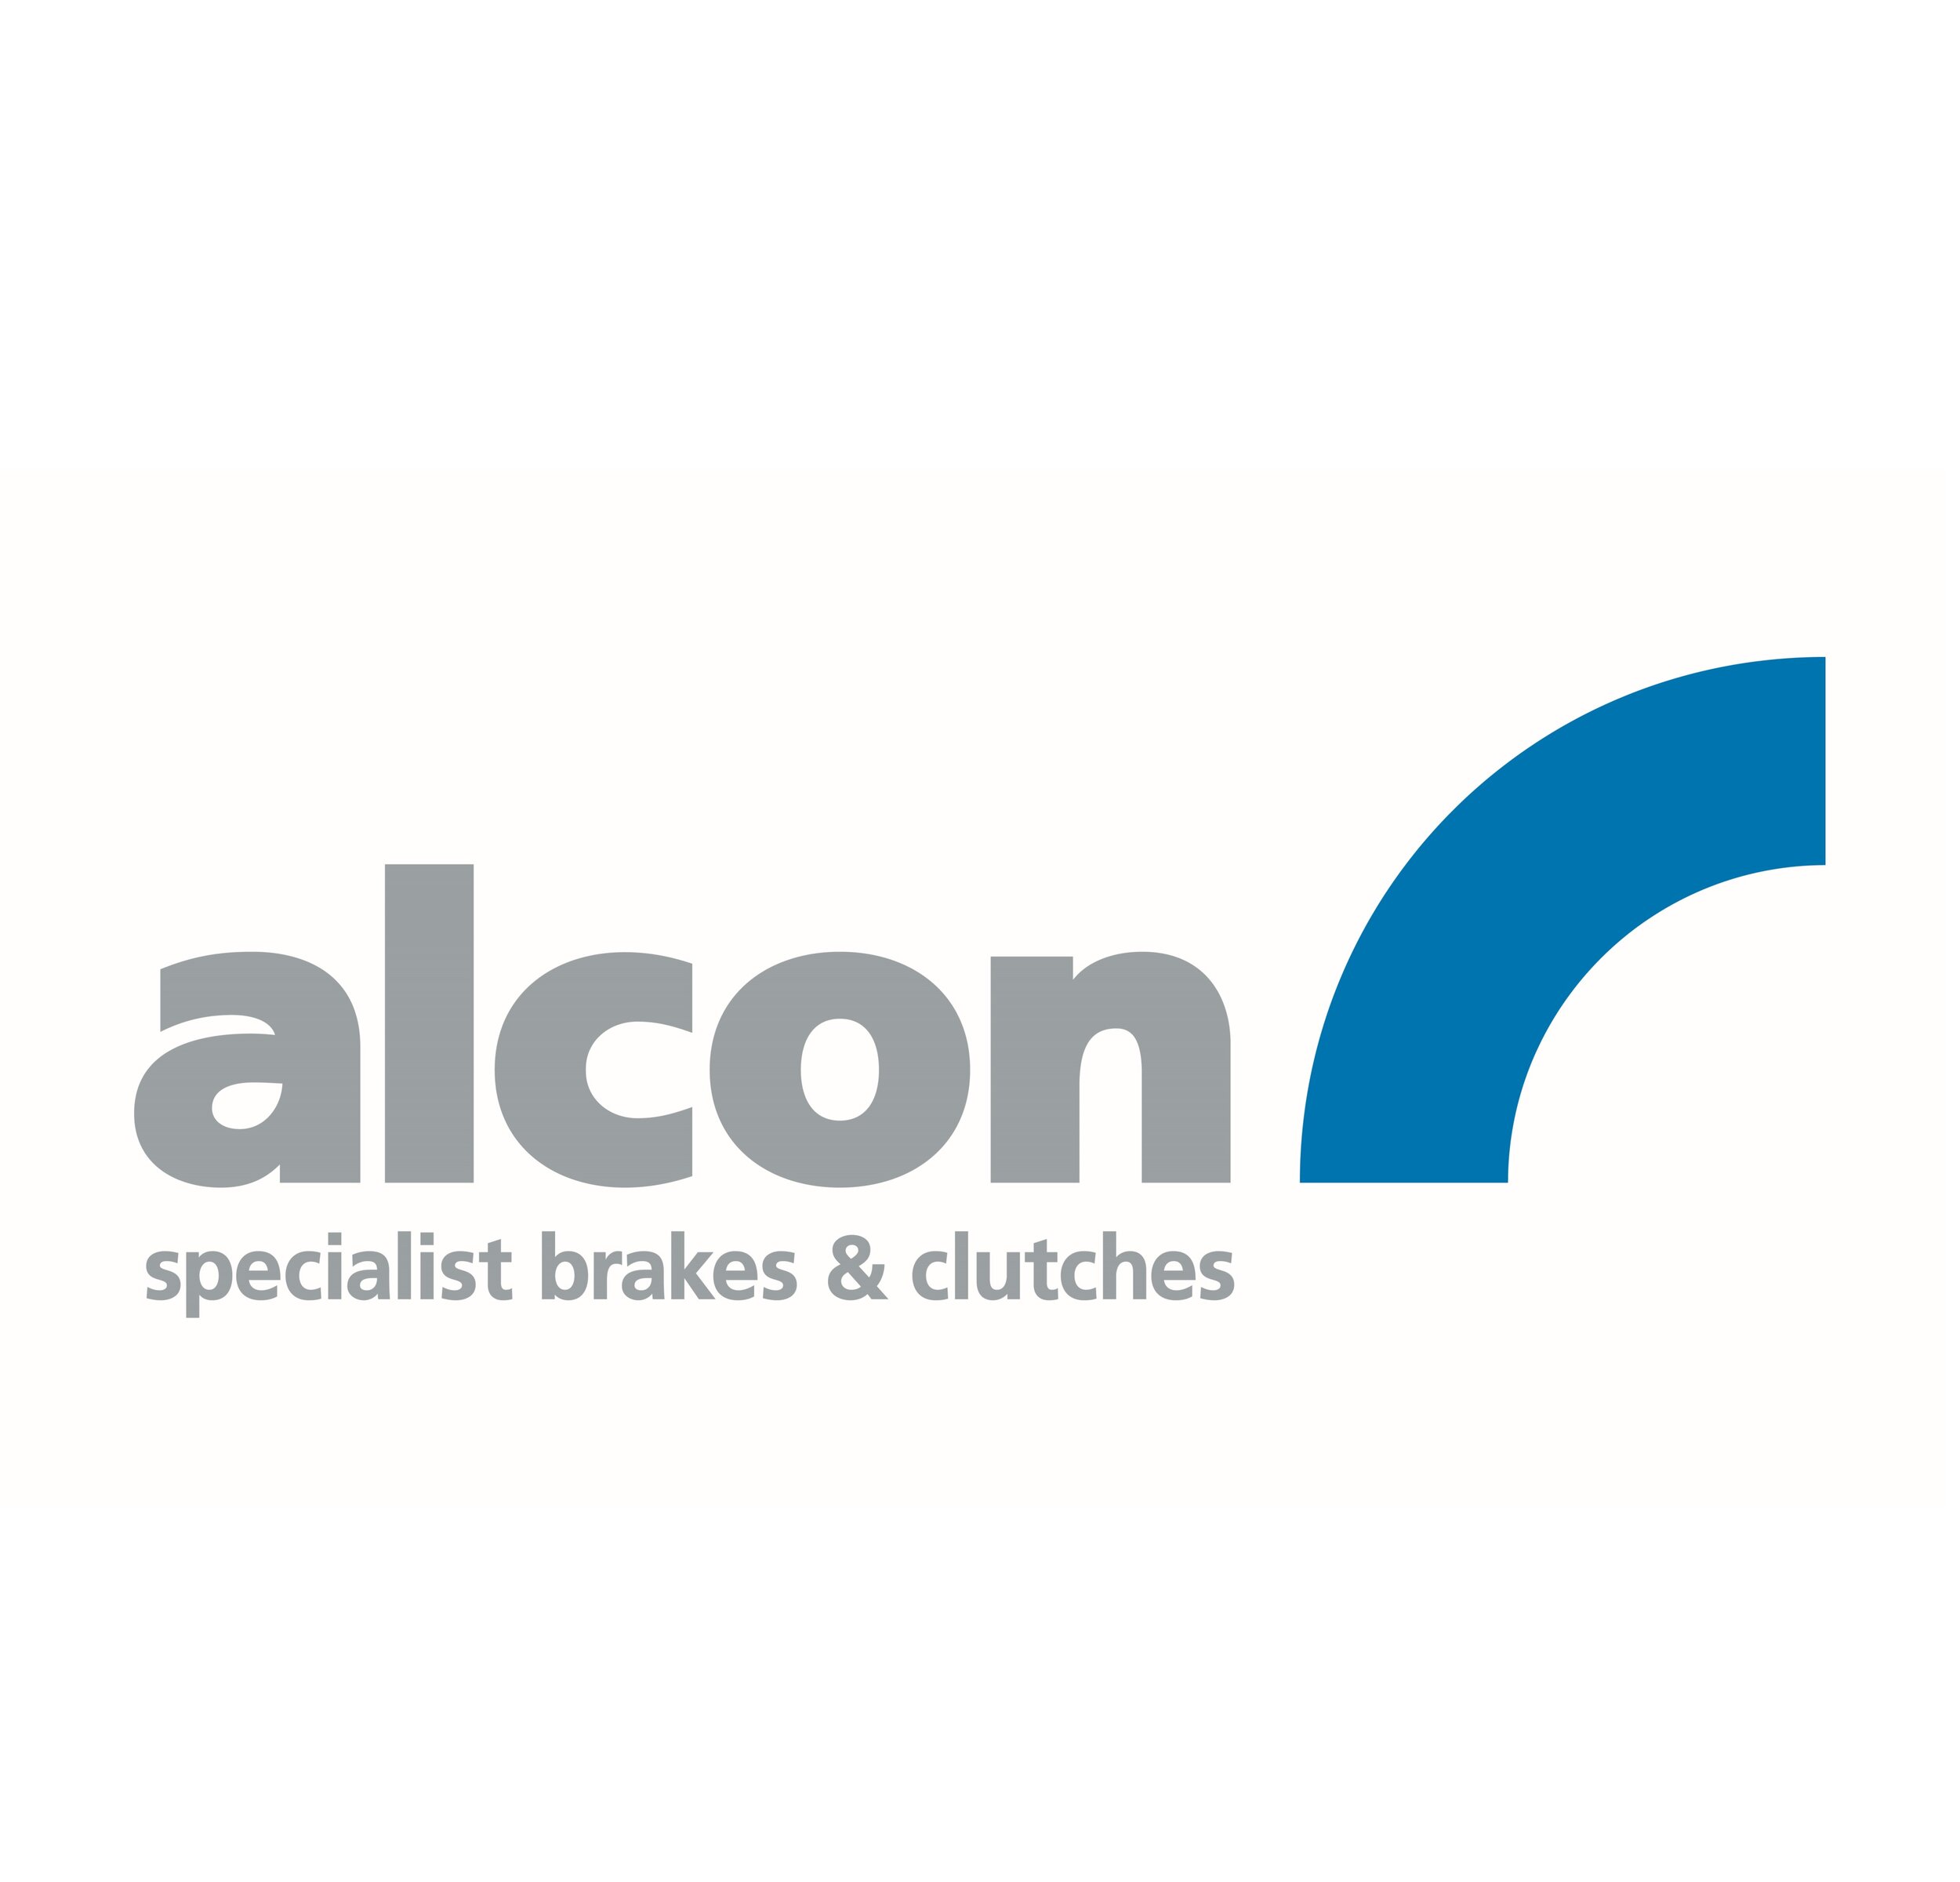 Alcon logo large (Pantone).jpg